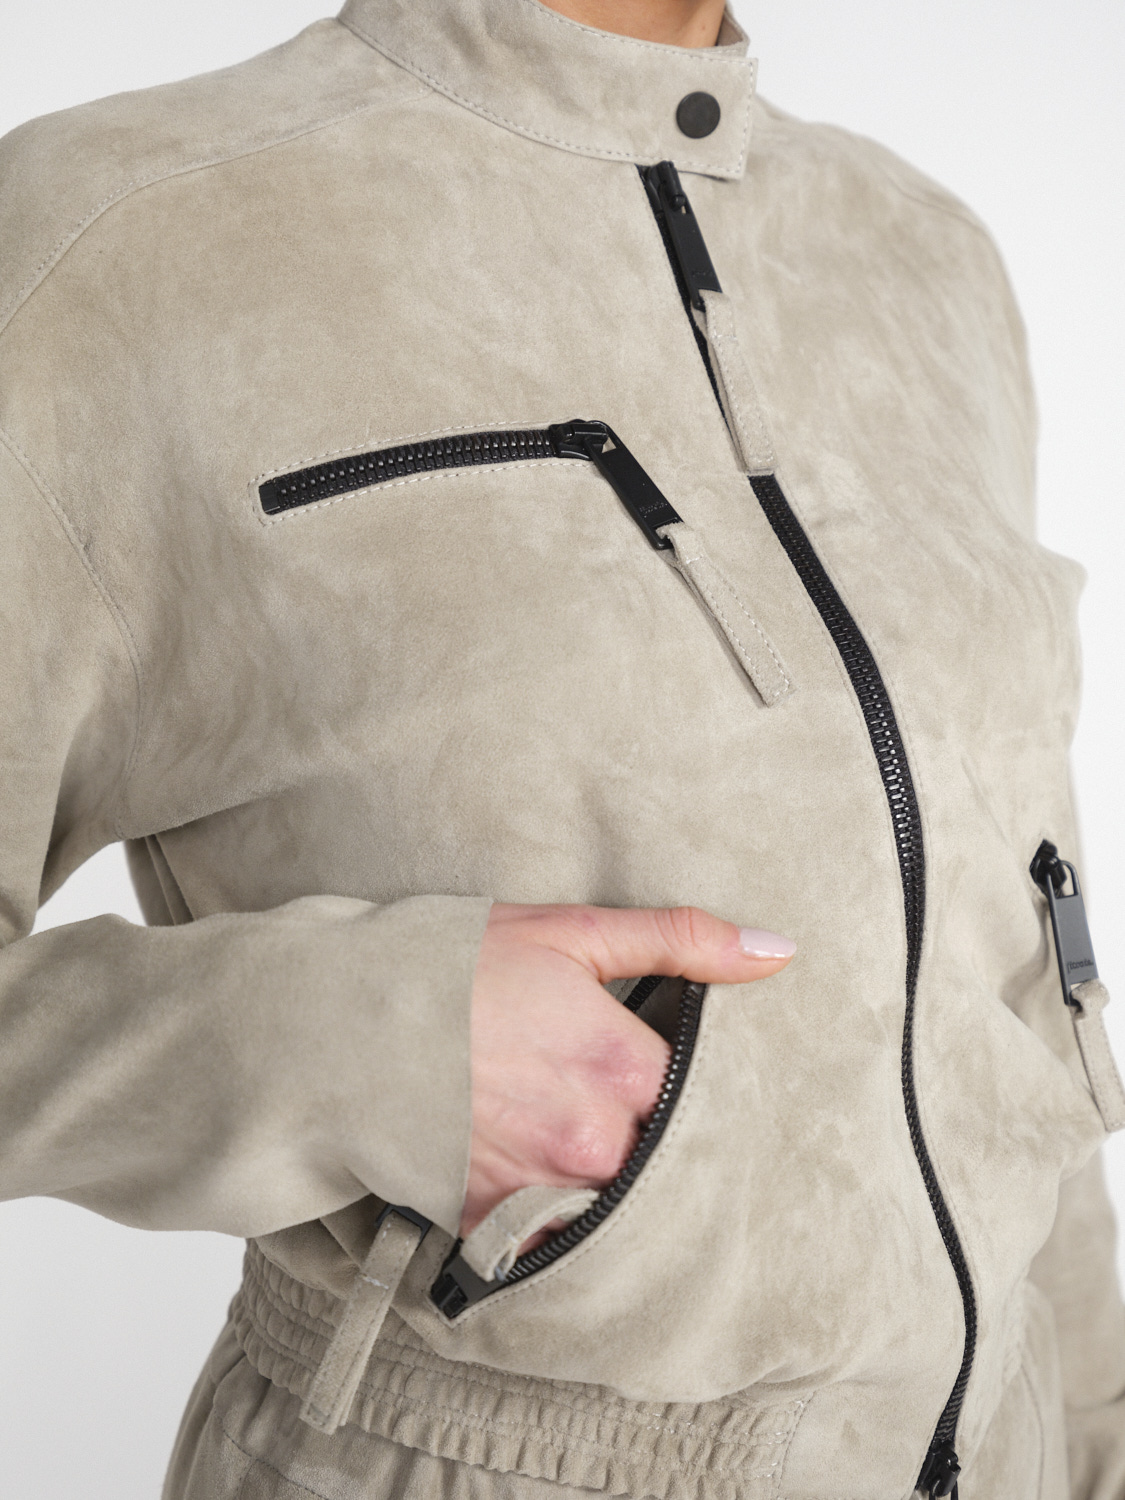 jitrois Blof - Stretchy suede jacket with black zip-details  beige 34